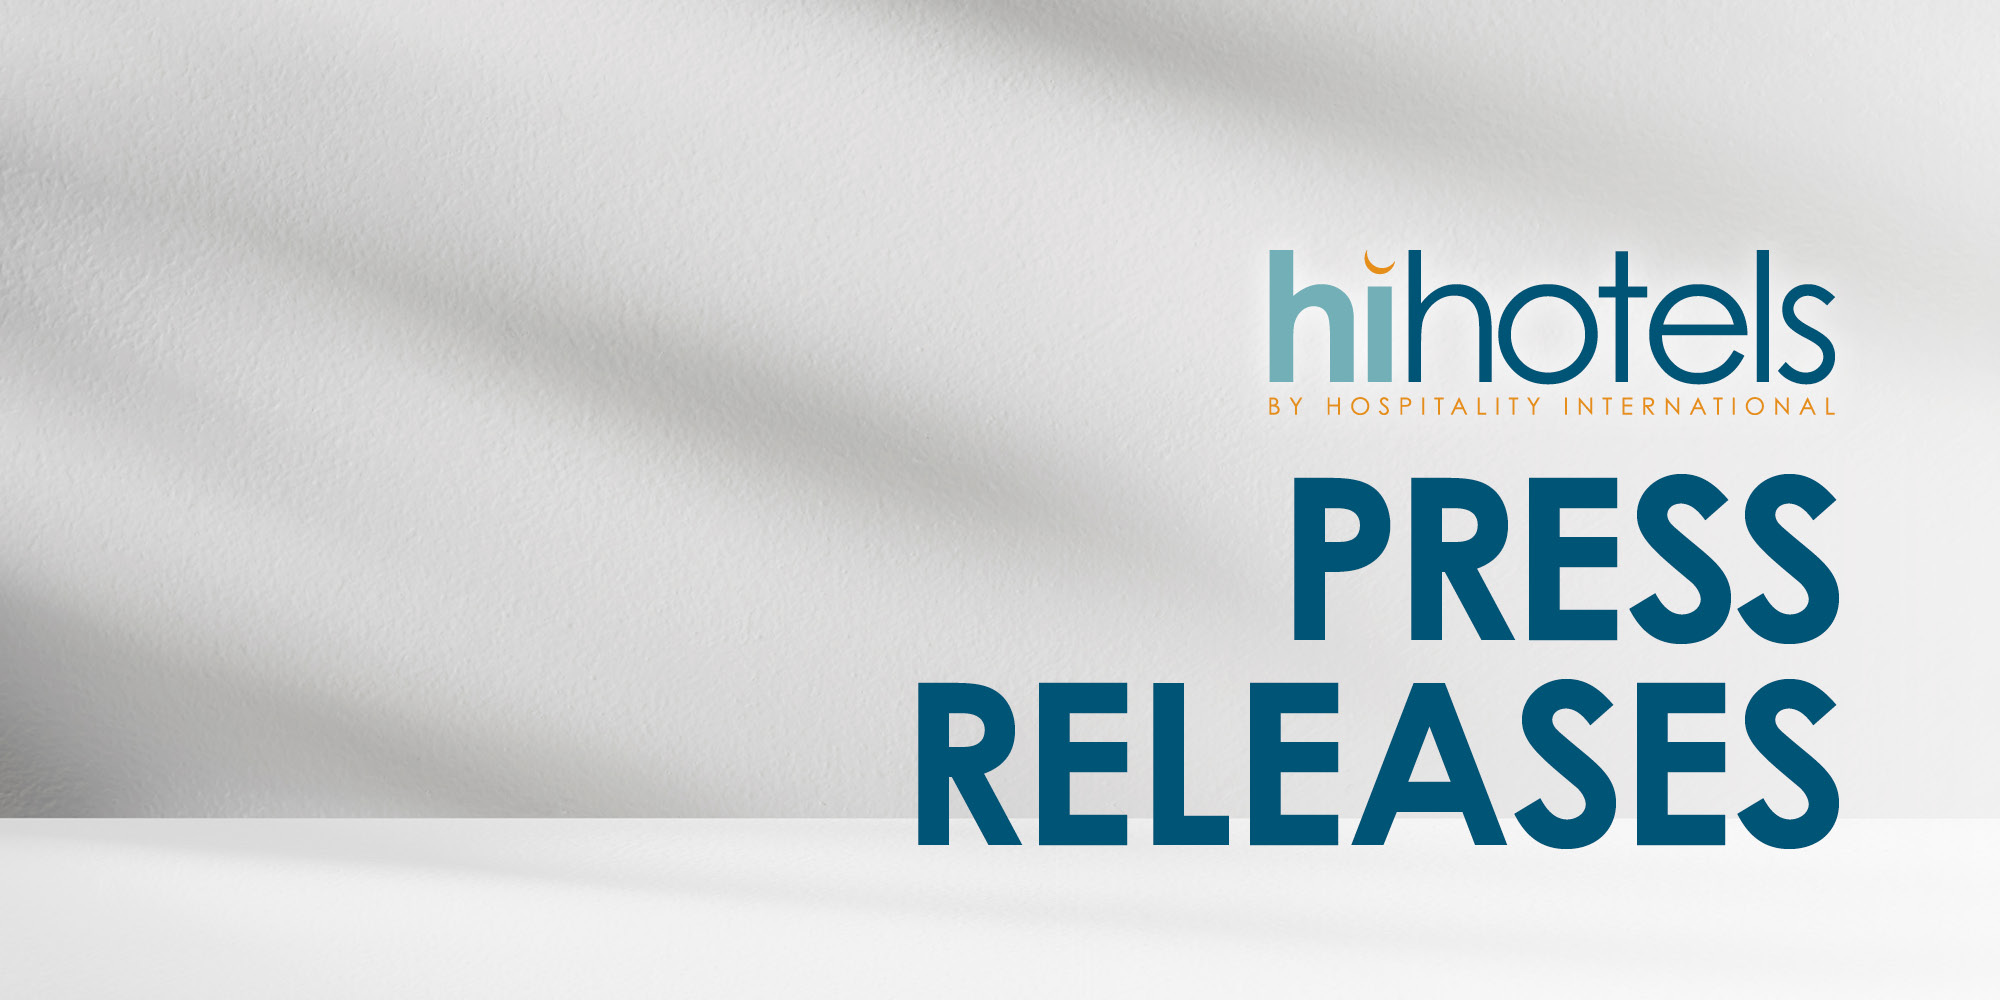 hihotels-hero-image-press-releases